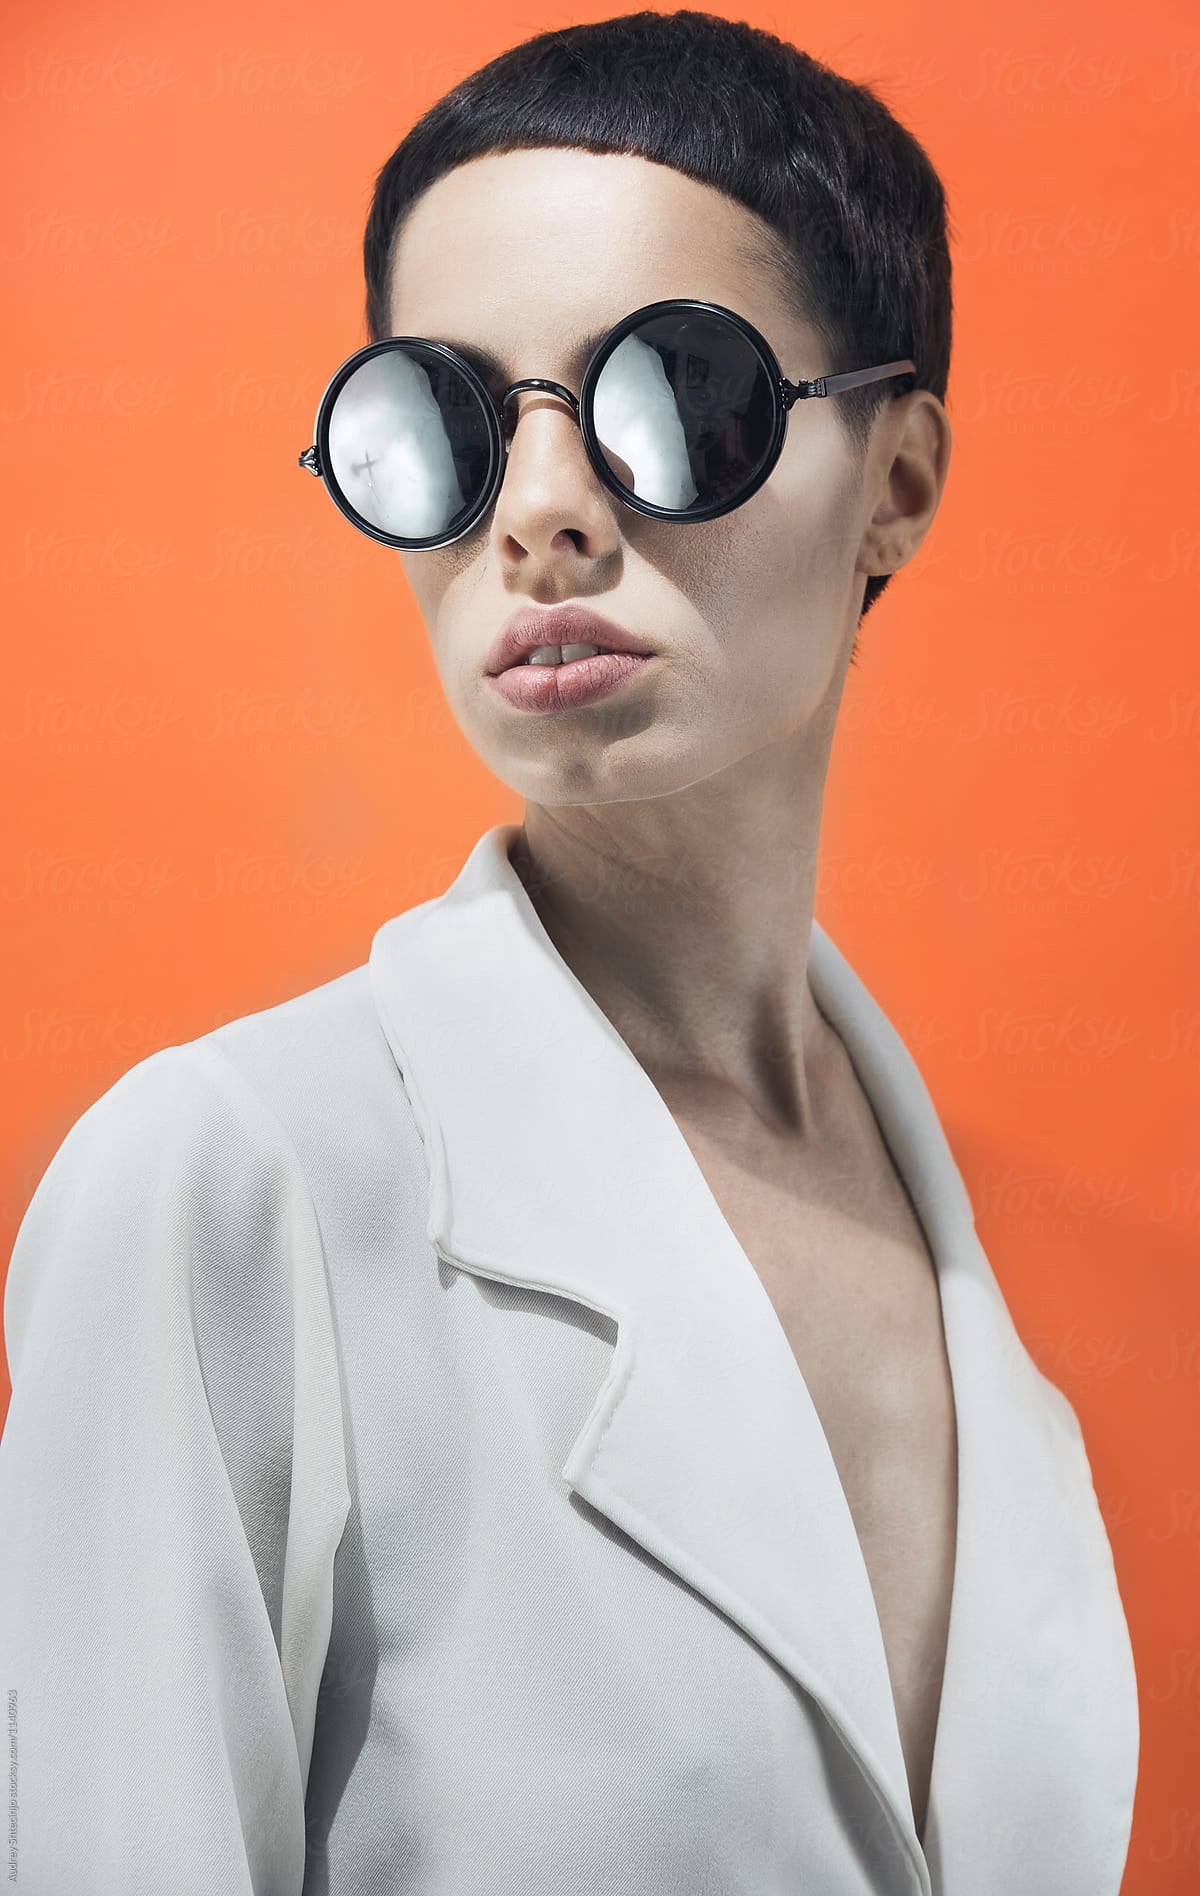 Fashion/conceptual portrait of female with sunglasses.